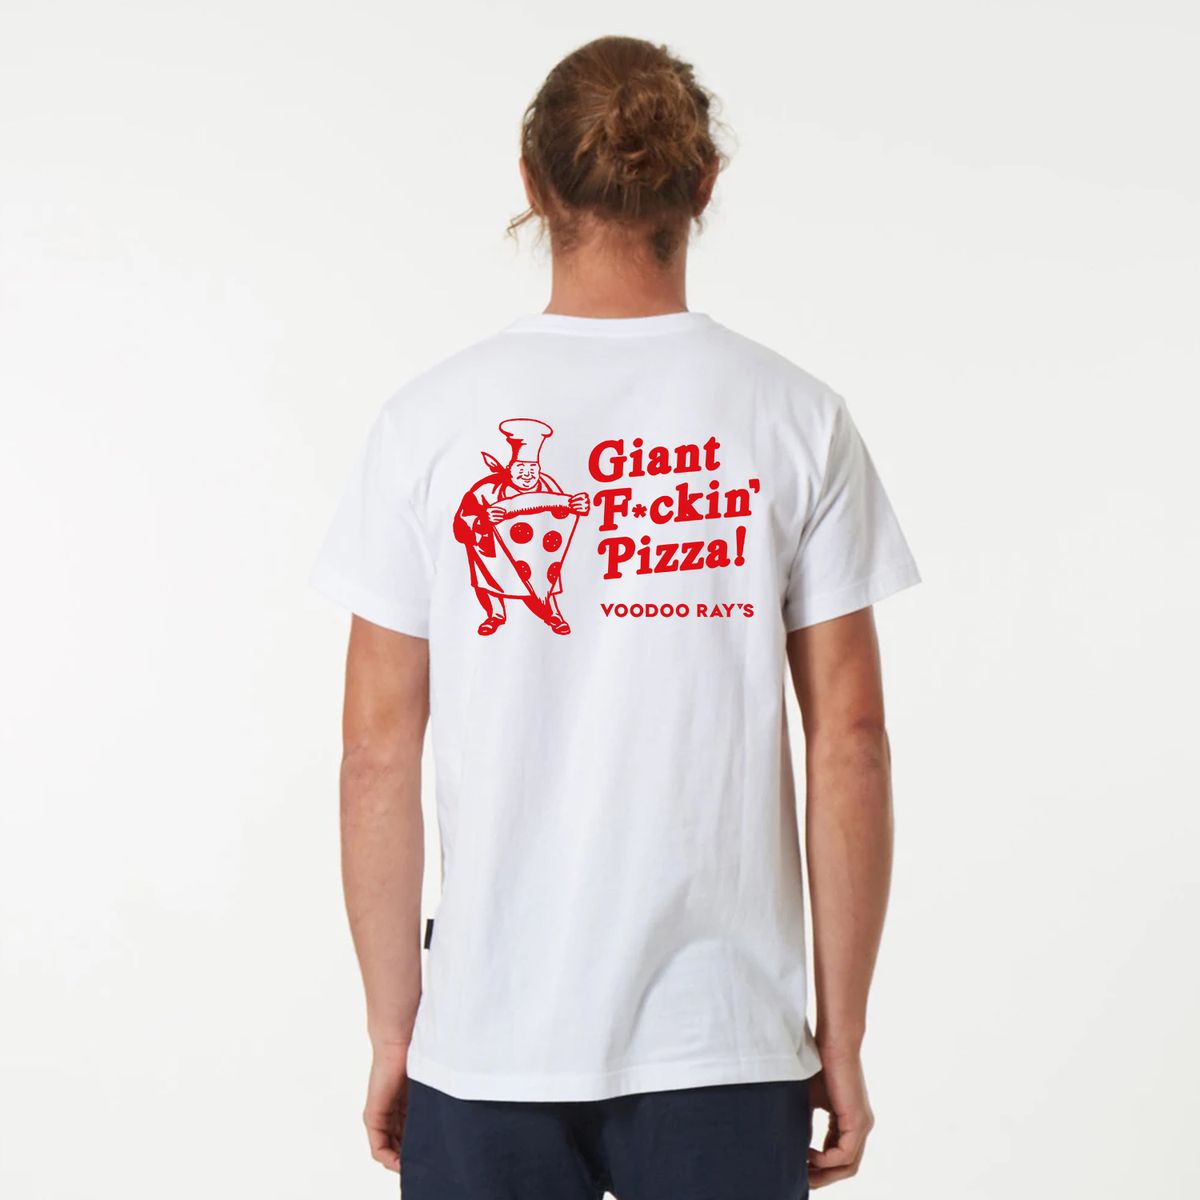 Voodoo Ray’s pizza t-shirt, merch